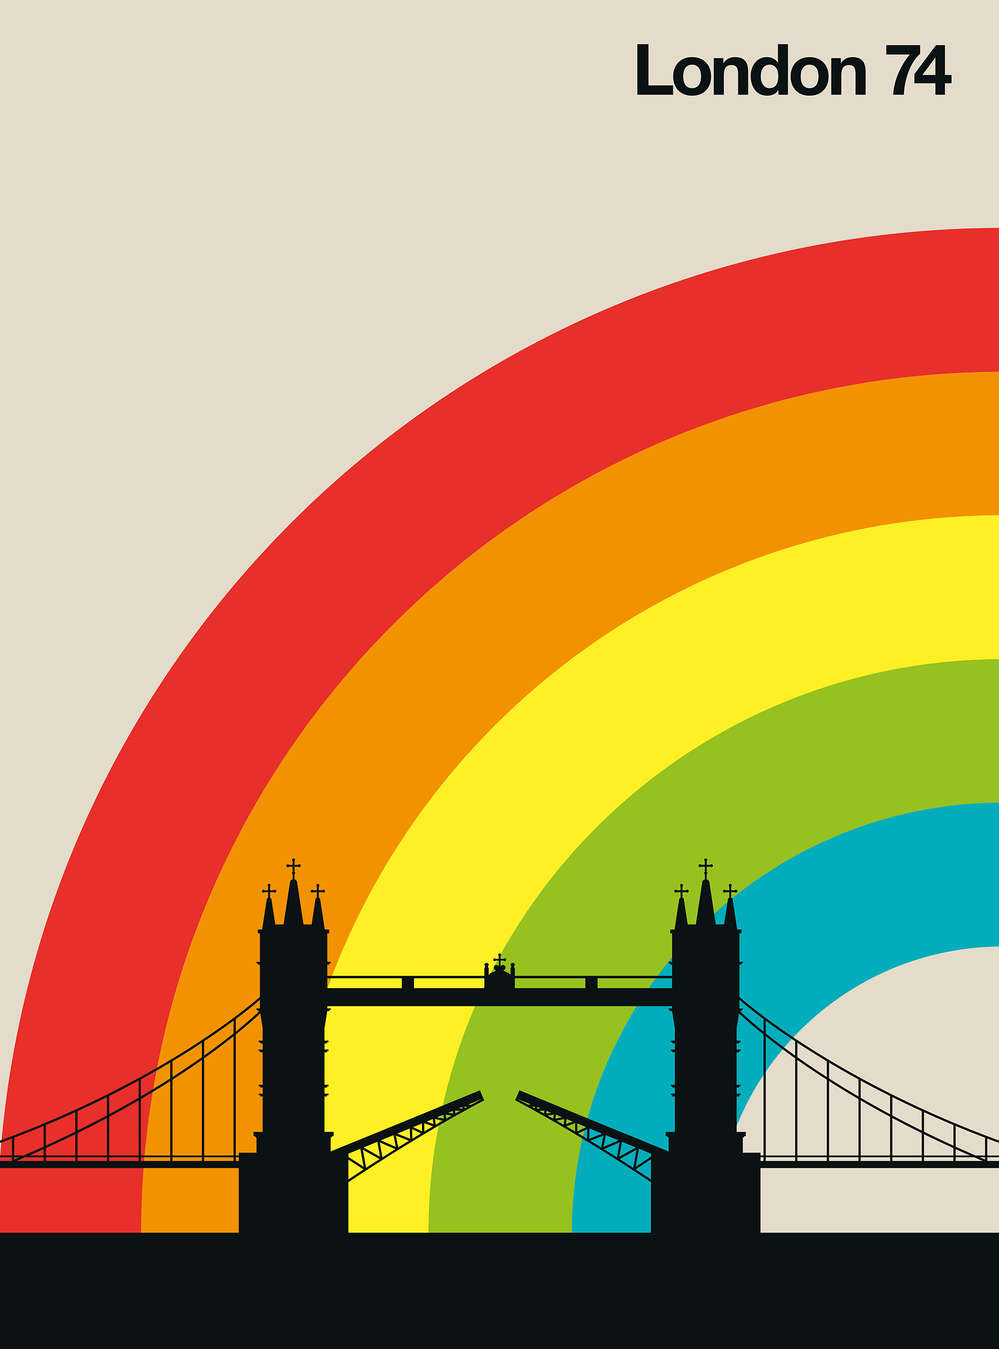             Carta da parati retrò London Tower Bridge & Rainbow
        